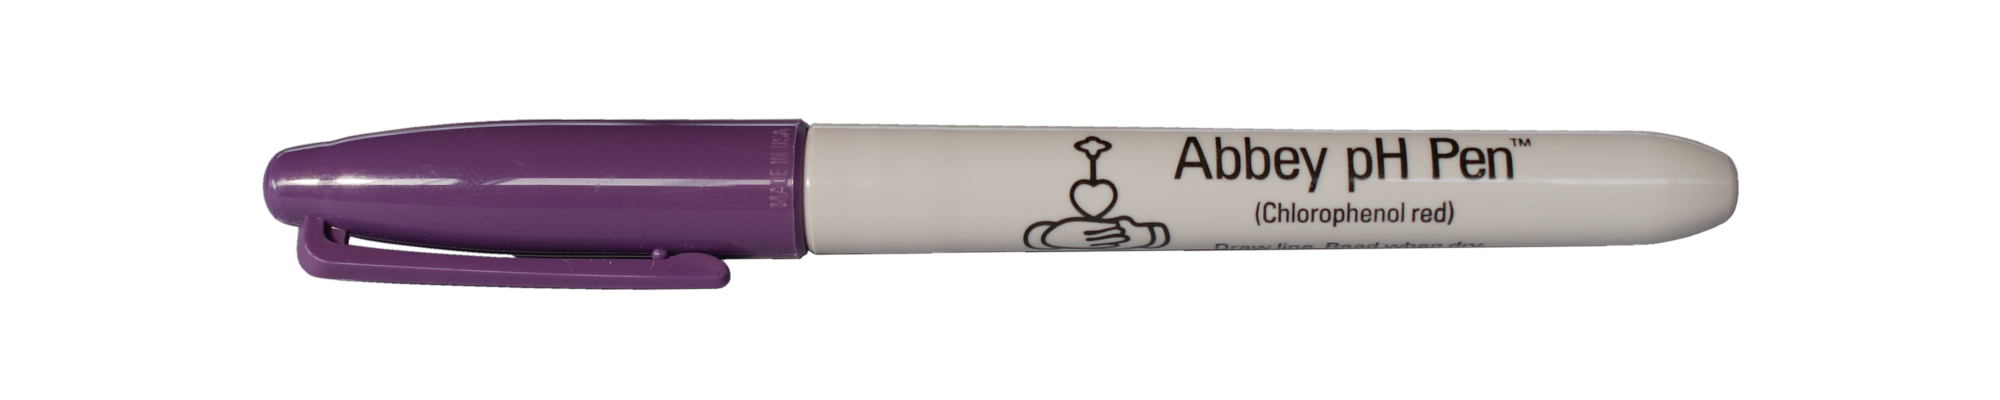 pH-Test Pen ABBEY